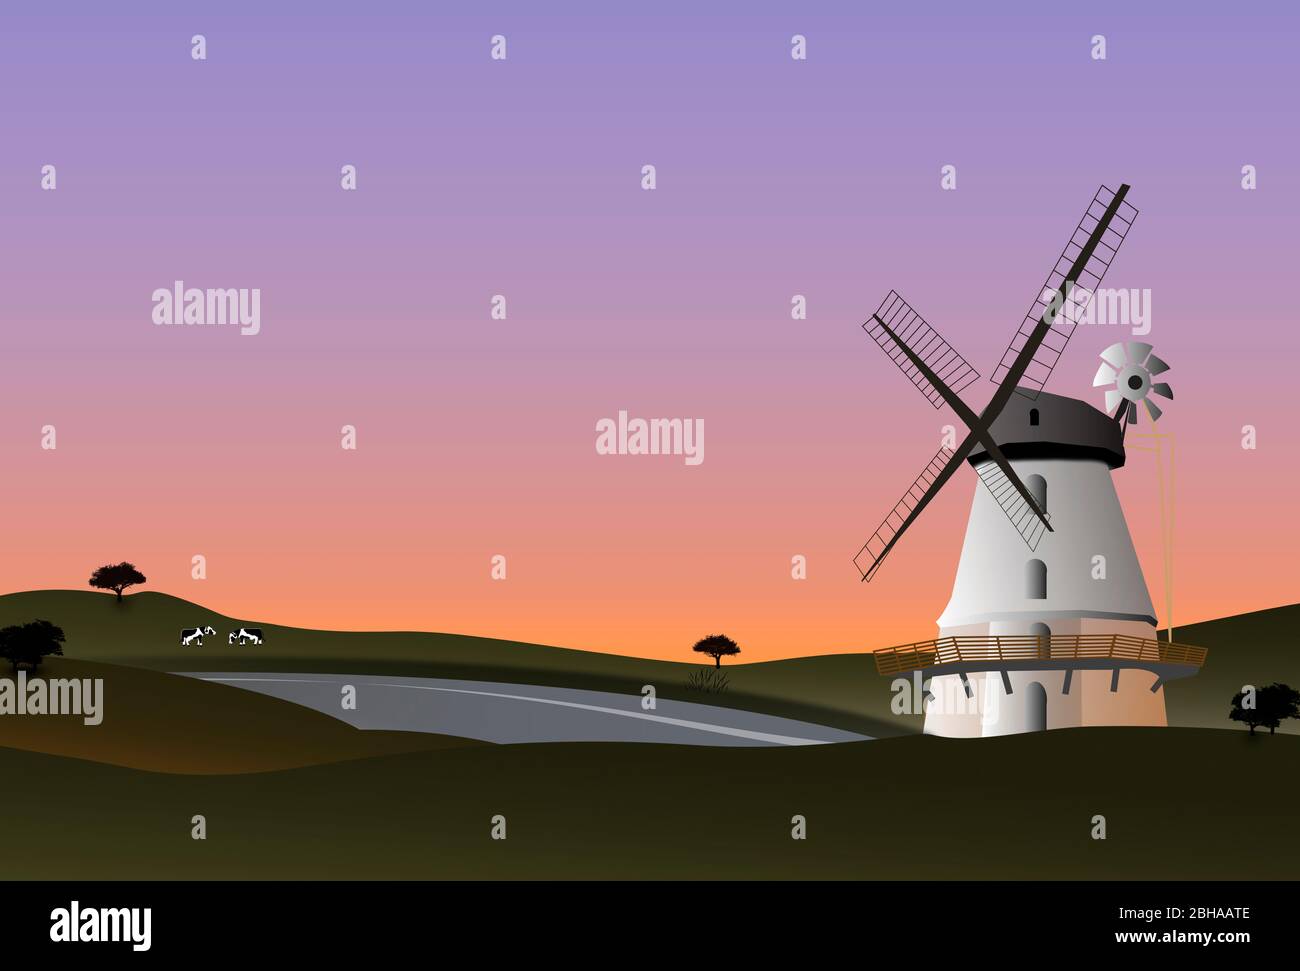 Windmühle, Landschaft, Sonnenuntergang, Postermotive. Vektorgrafiken. Stockfoto